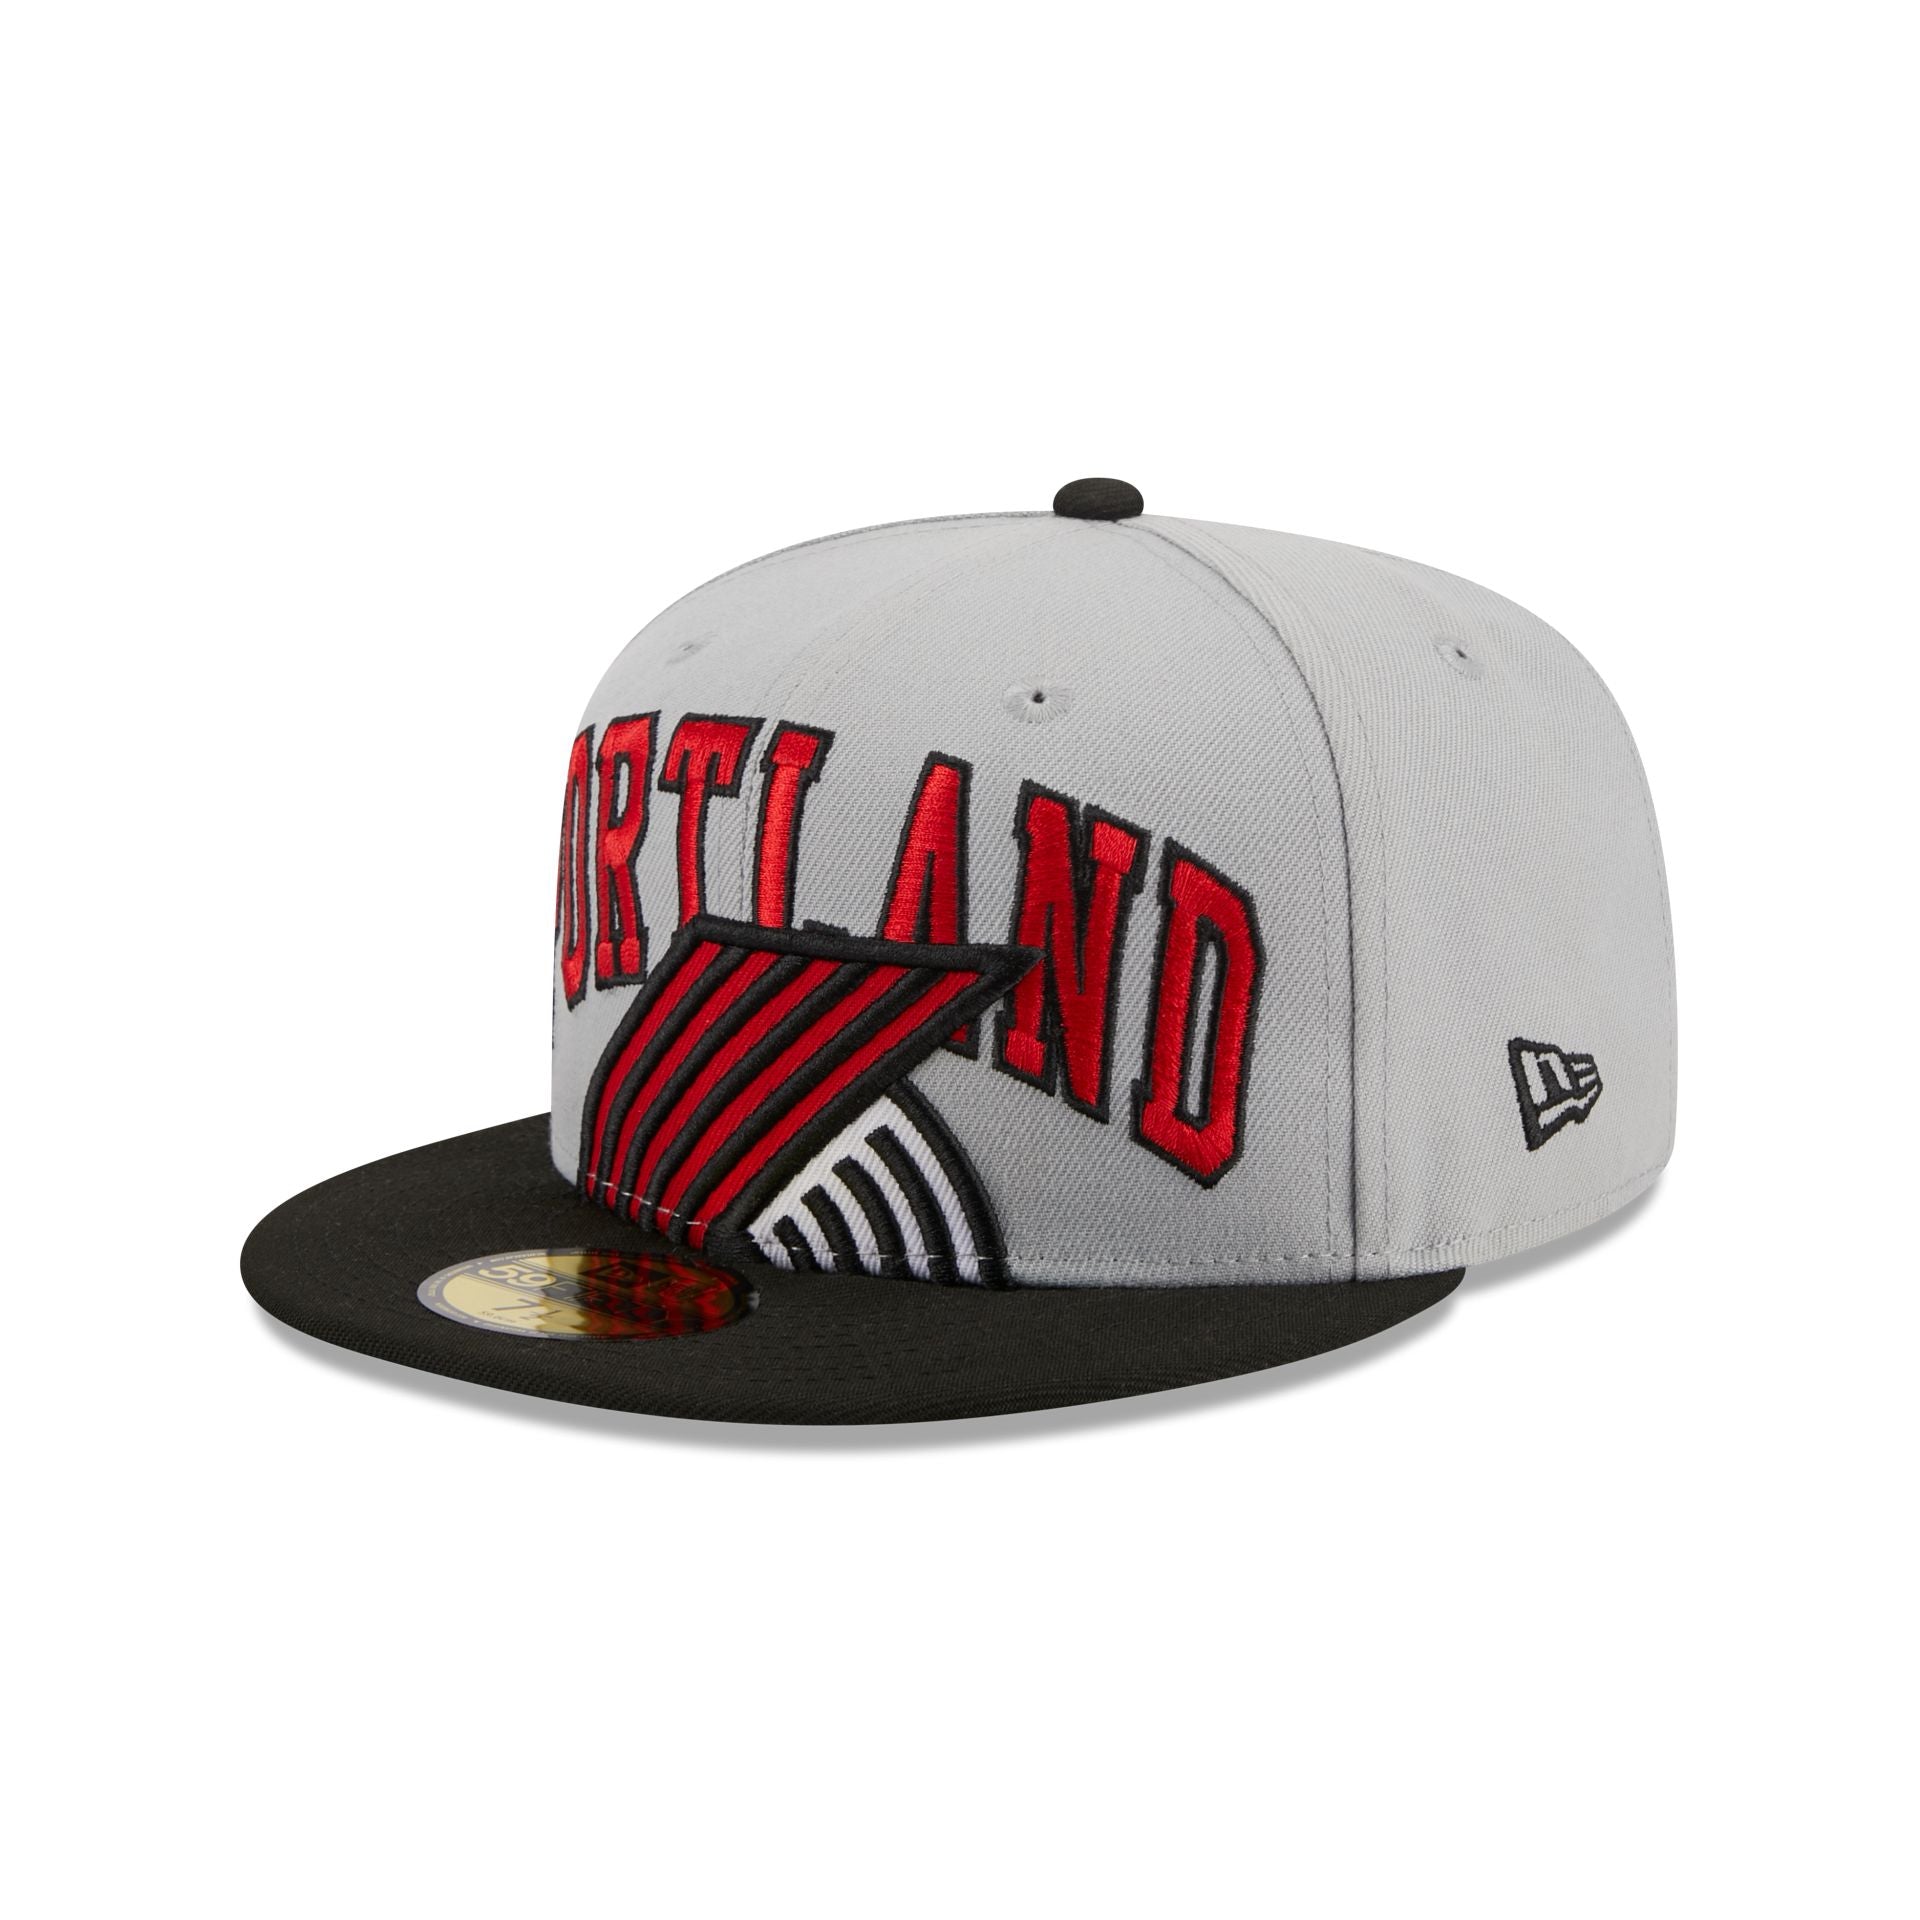 Men's New Era Black Portland Trail Blazers Team Logoman 59FIFTY Fitted Hat  7 1/8